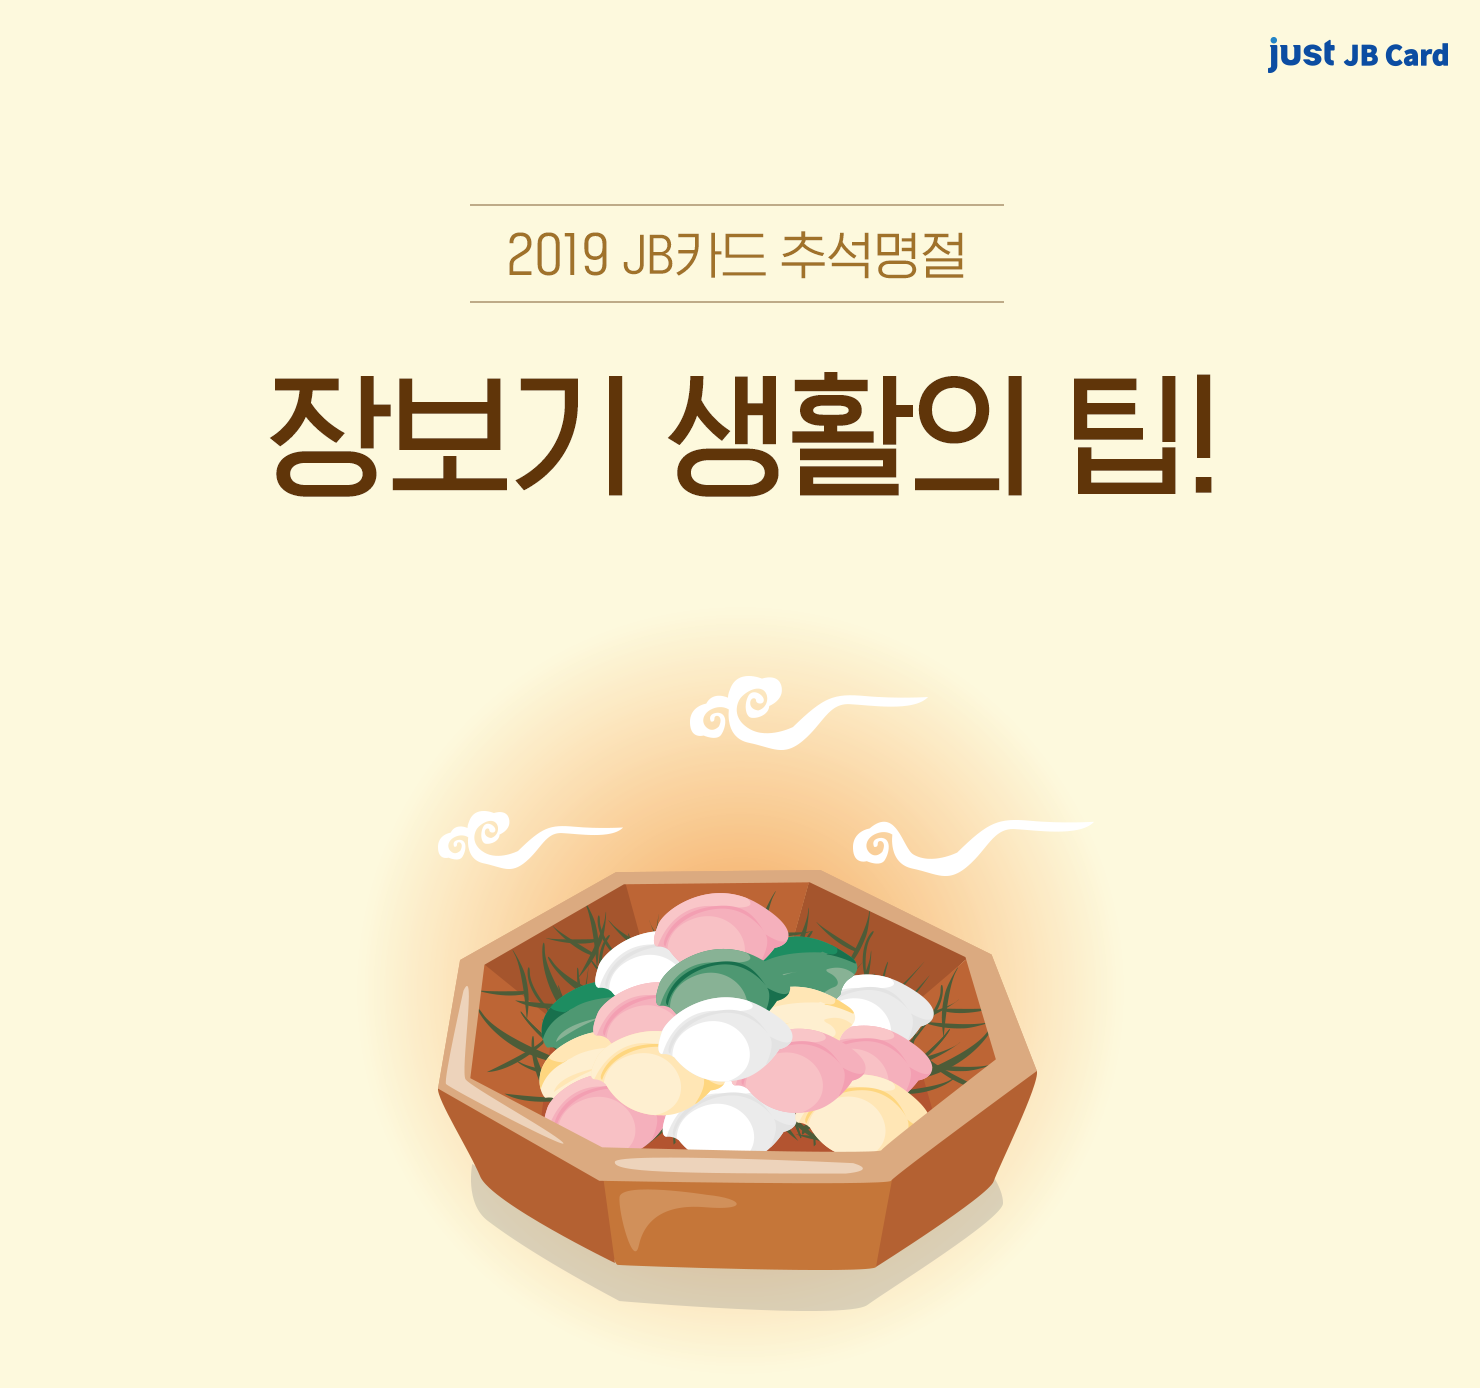 2019 JB카드 추석명절 장보기 생활의 팁!